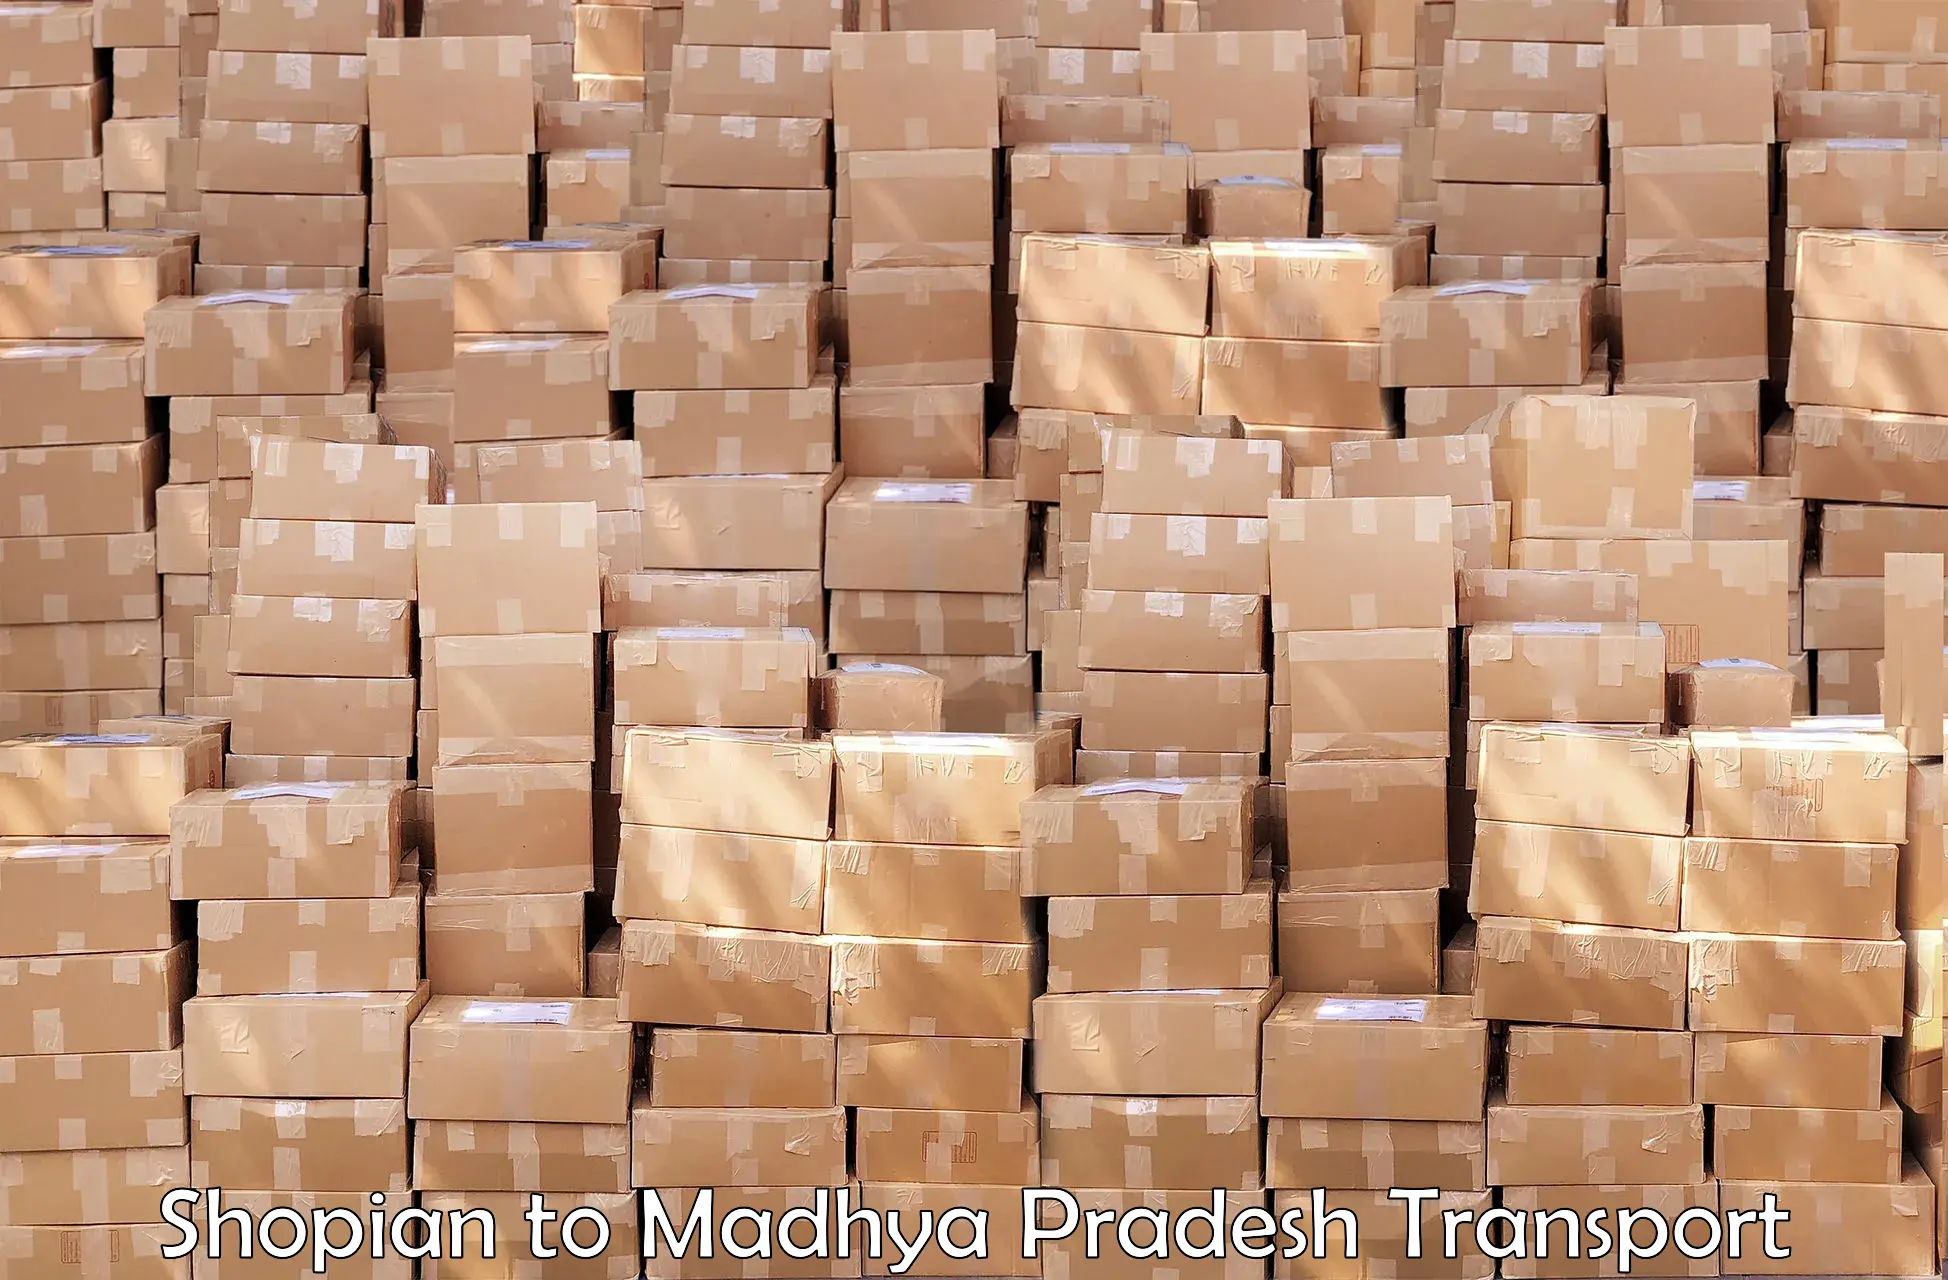 Daily parcel service transport Shopian to Sendhwa